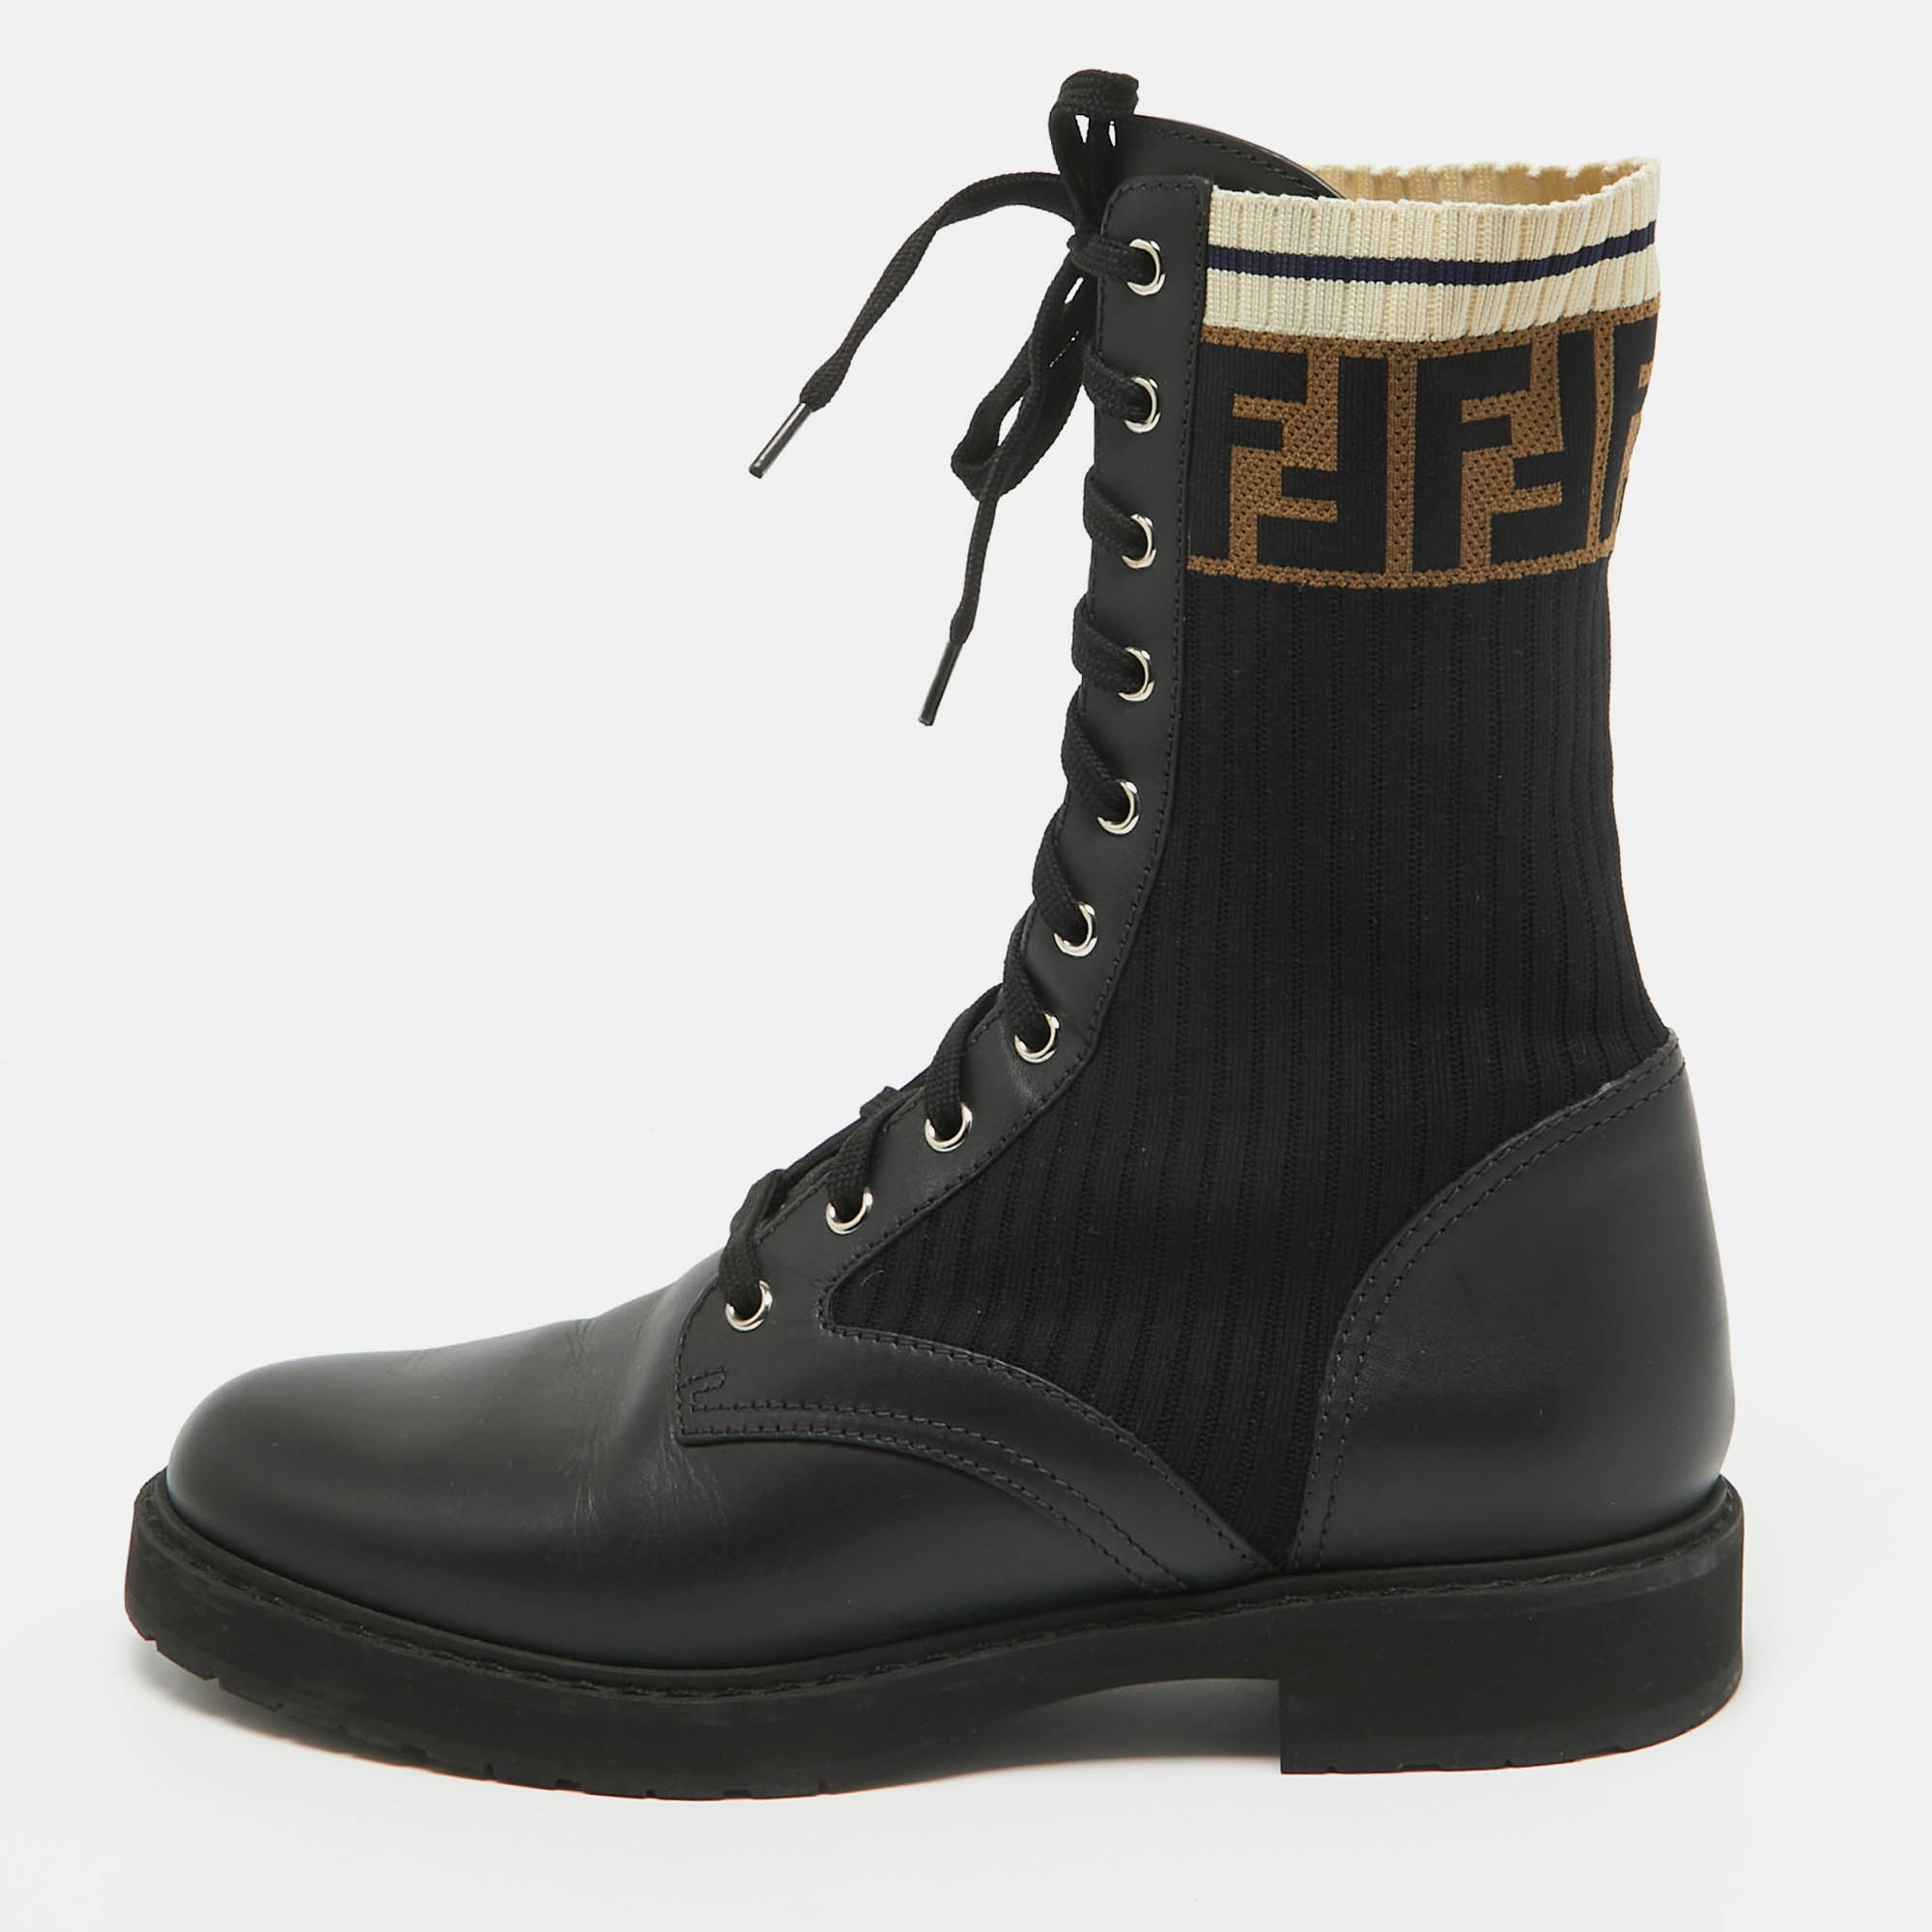 Fendi black leather and zucca stretch fabric rockoko combat boots size 41